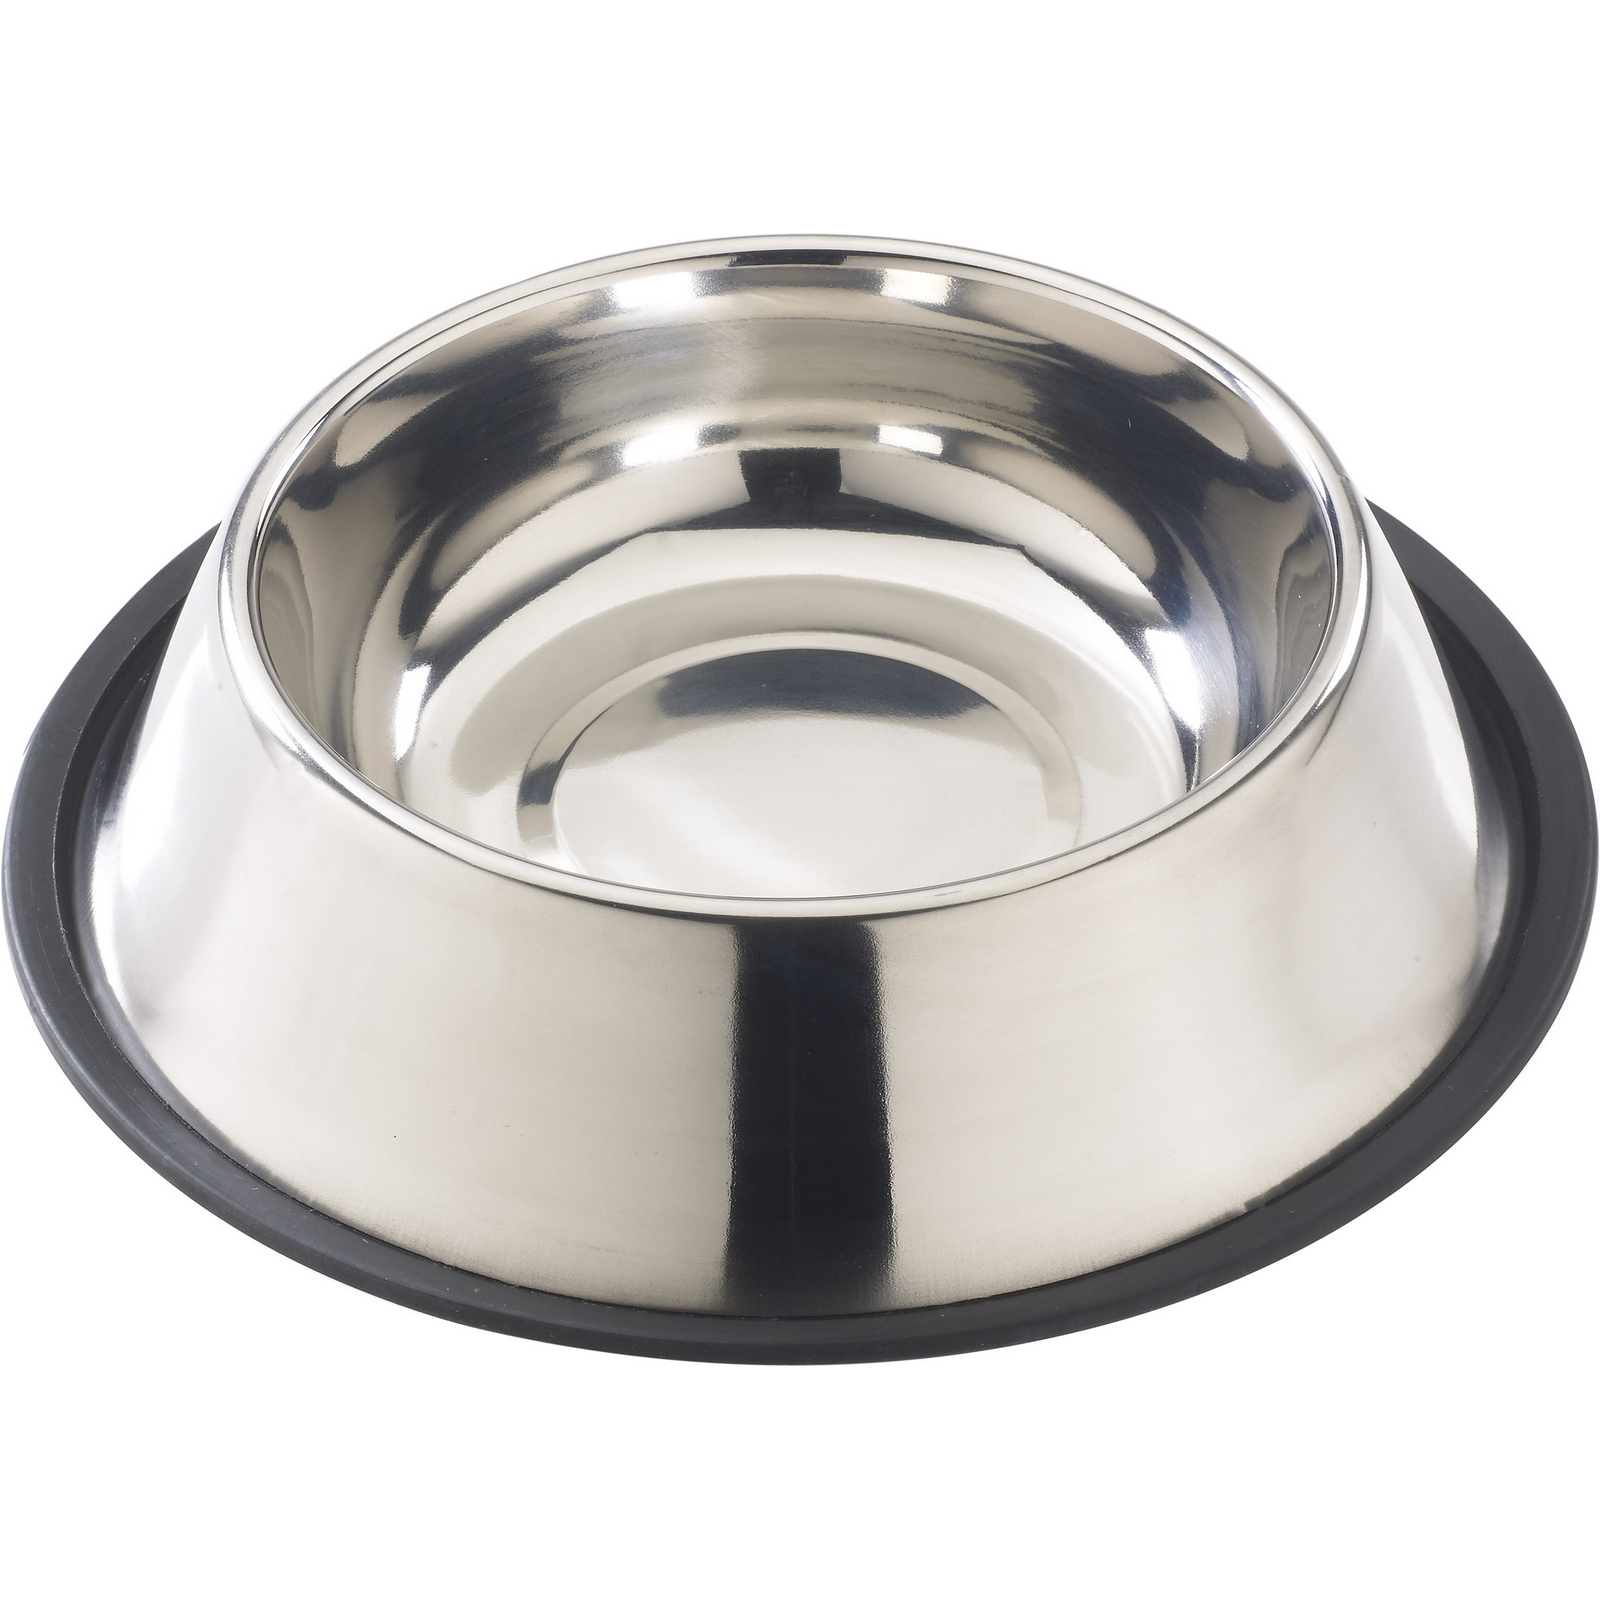 Stainless Steel No-Tip Mirror Dish 32oz